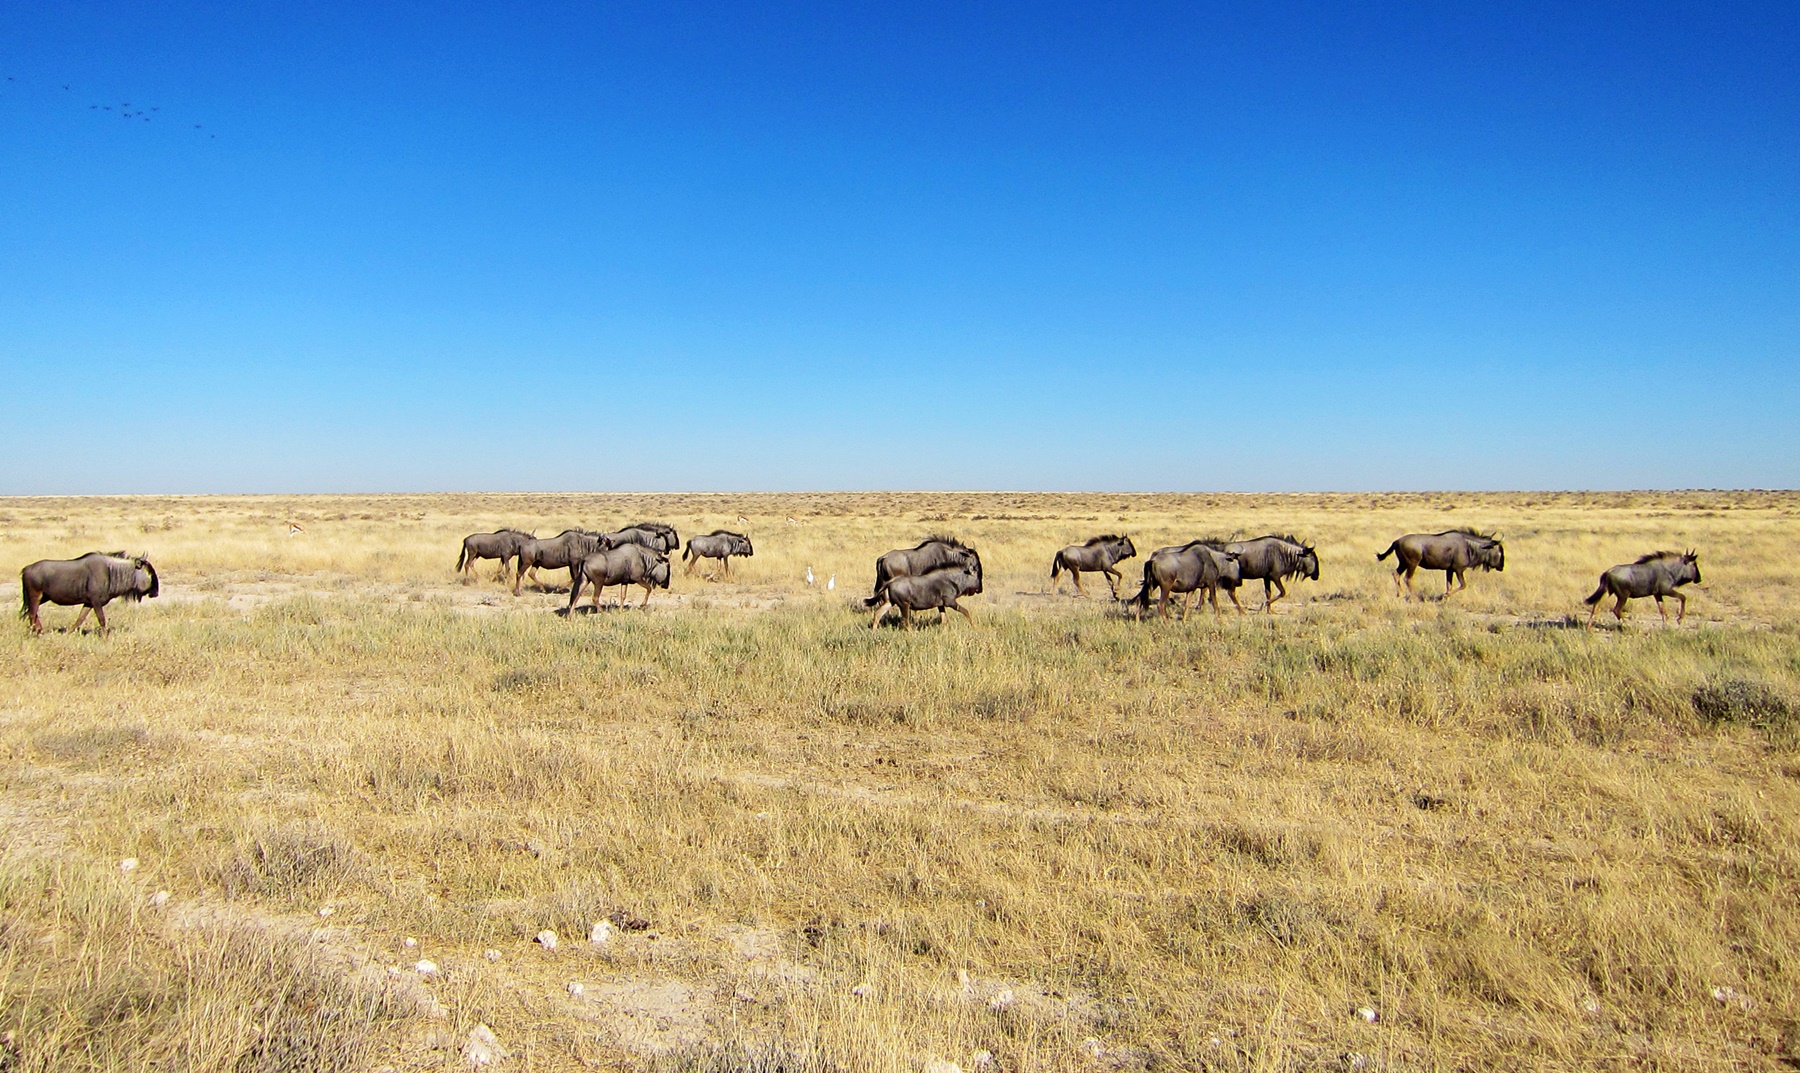 Wildebeests on a flat plain in Etosha National Park